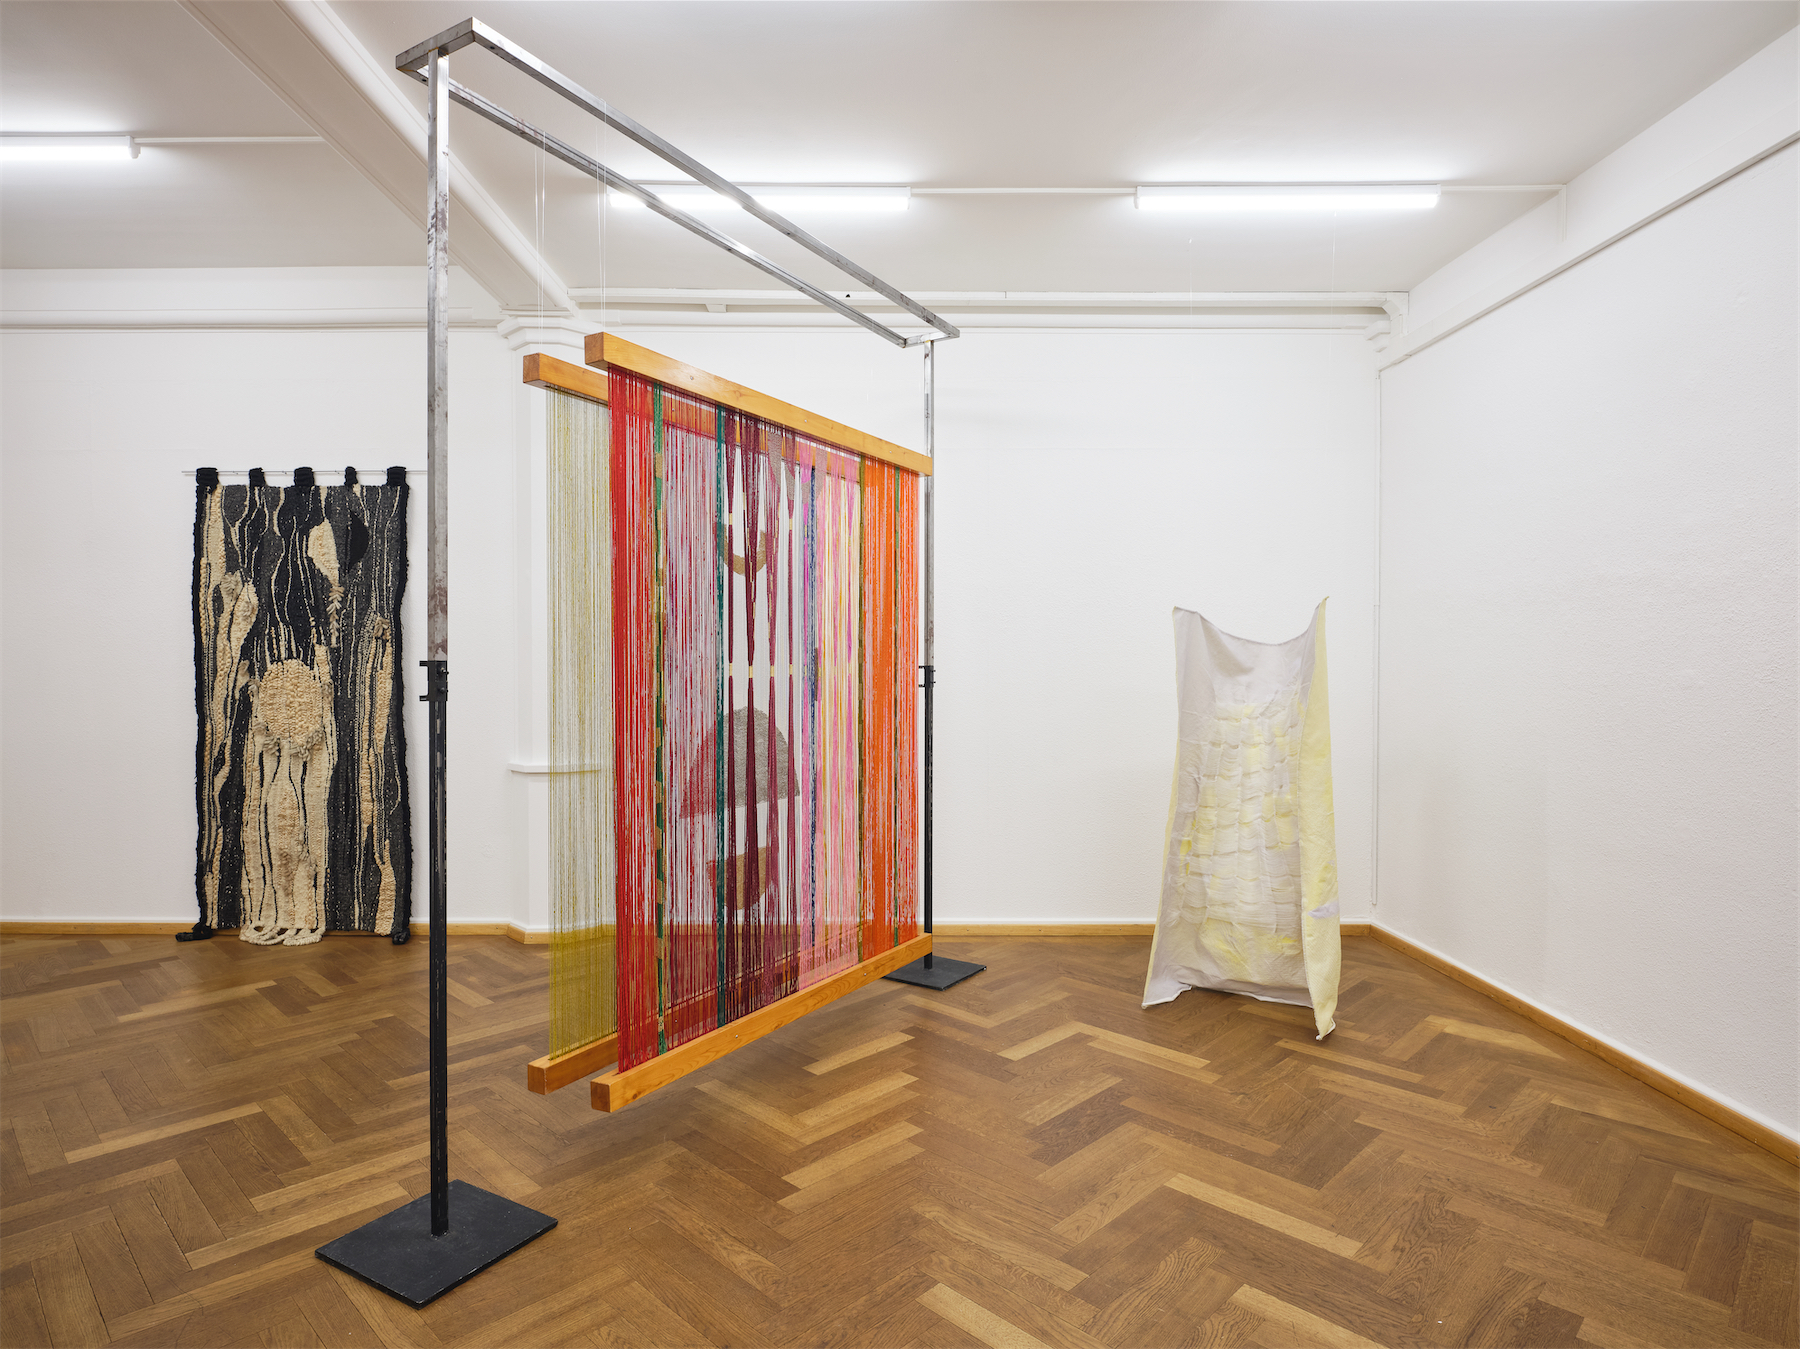 Installation views Stitches. Home as Composition, Jeanne-Odette Evard, Elsi Giauque, Marie Schumann, KRONE COURONNE, 2022. Photo: © Nicolas Delaroche Studio